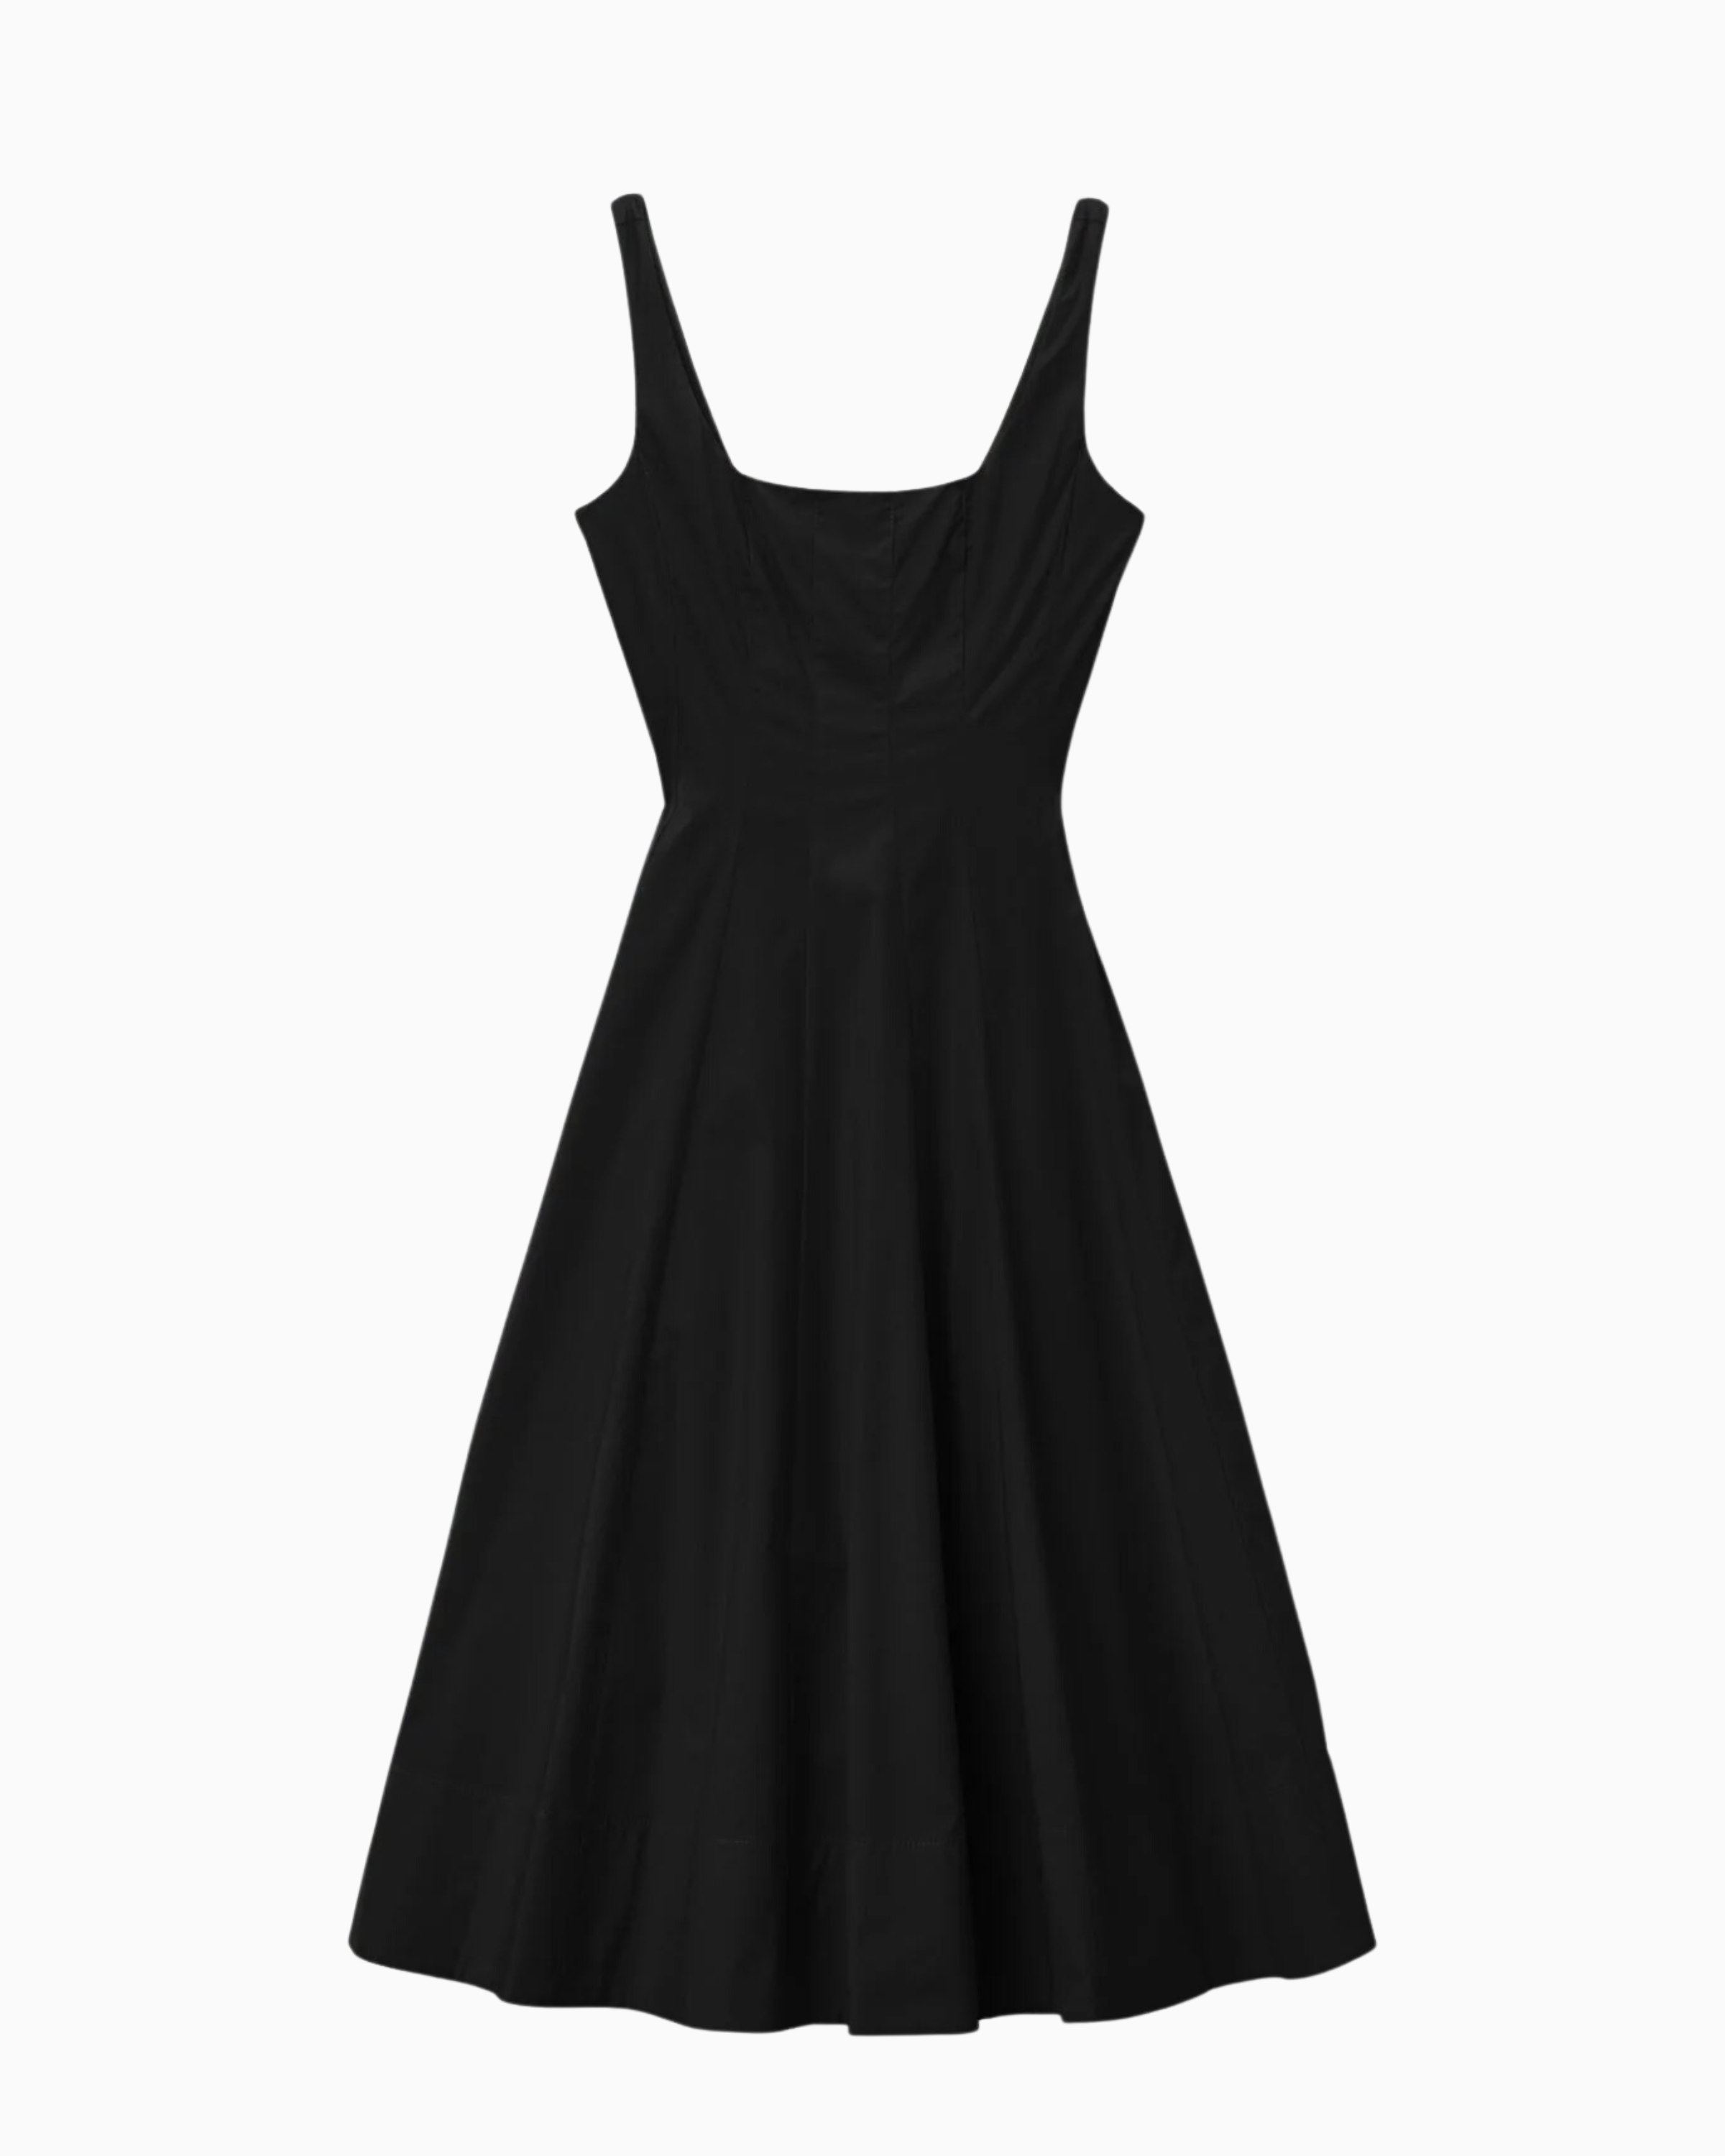 Staud Wells Dress in Black